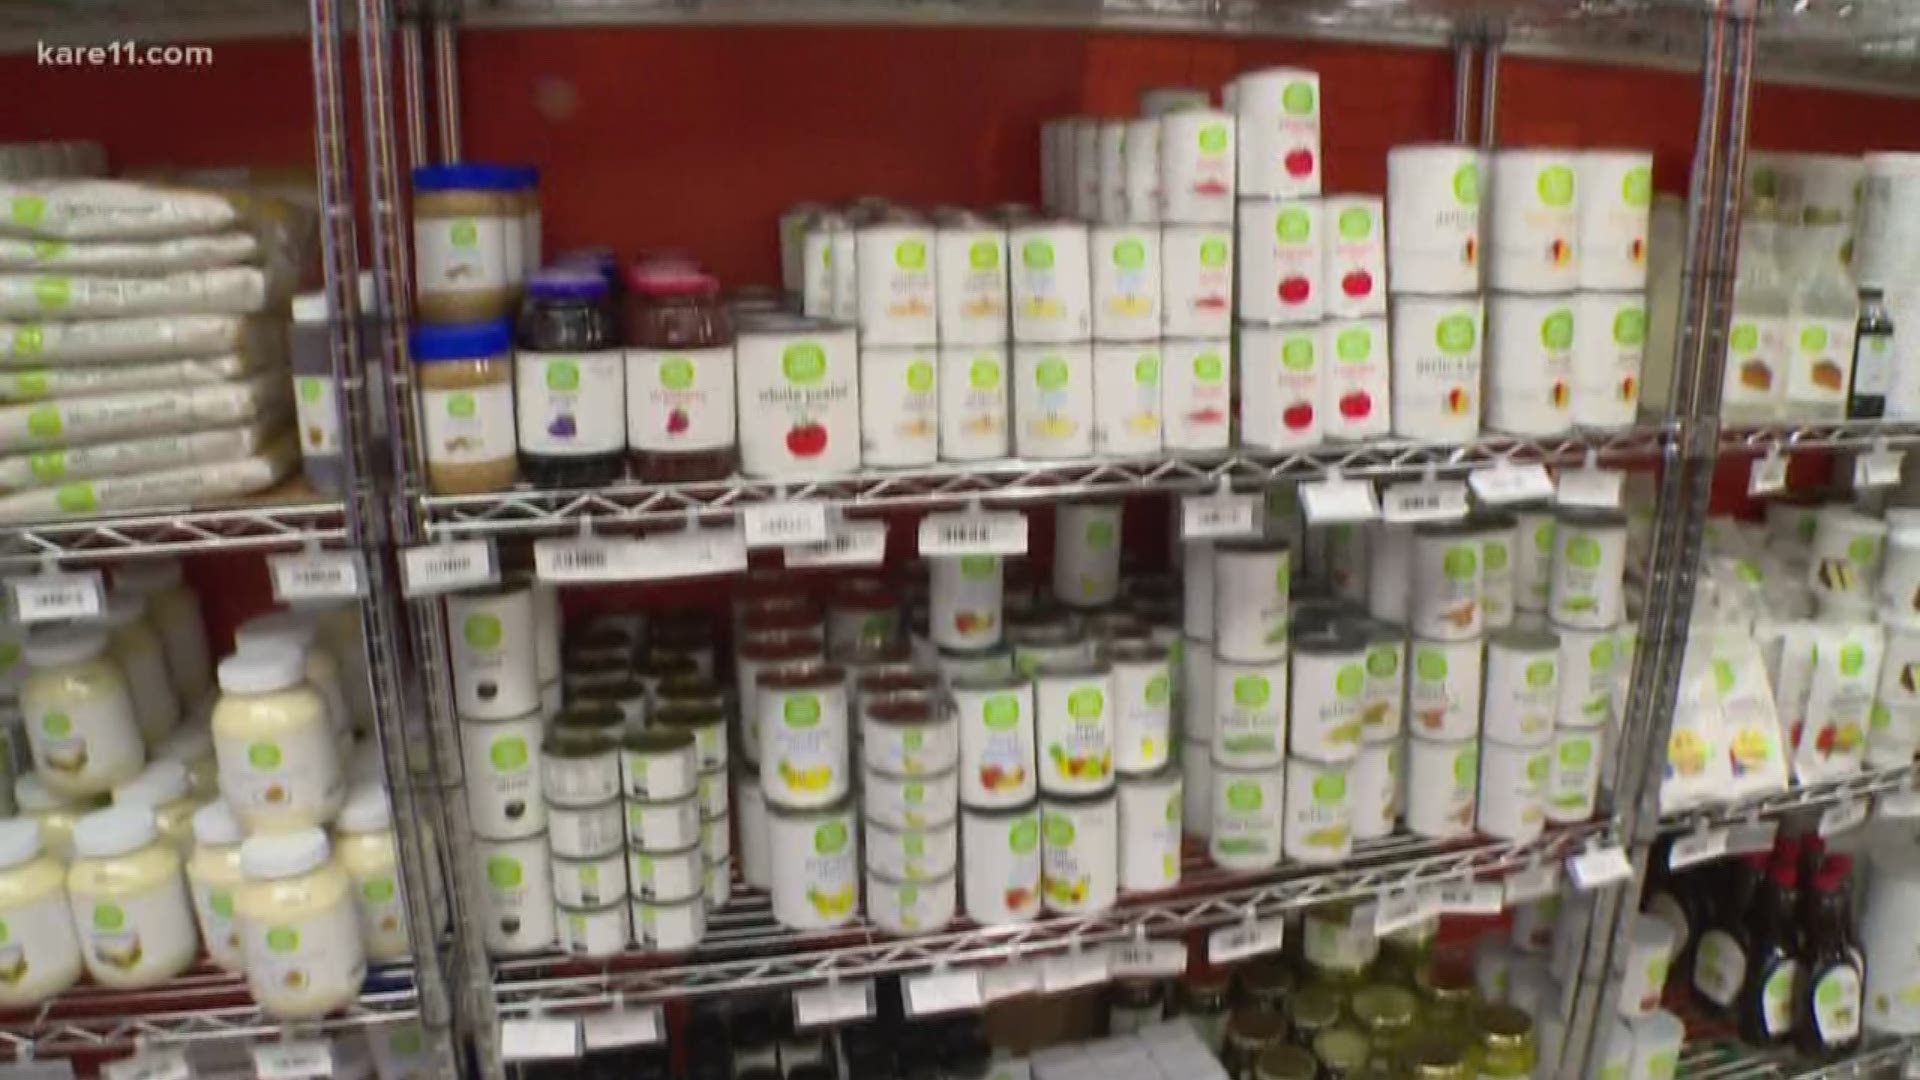 A neighborhood grocery store in St. Paul sells Hyvee groceries for under $6.00.